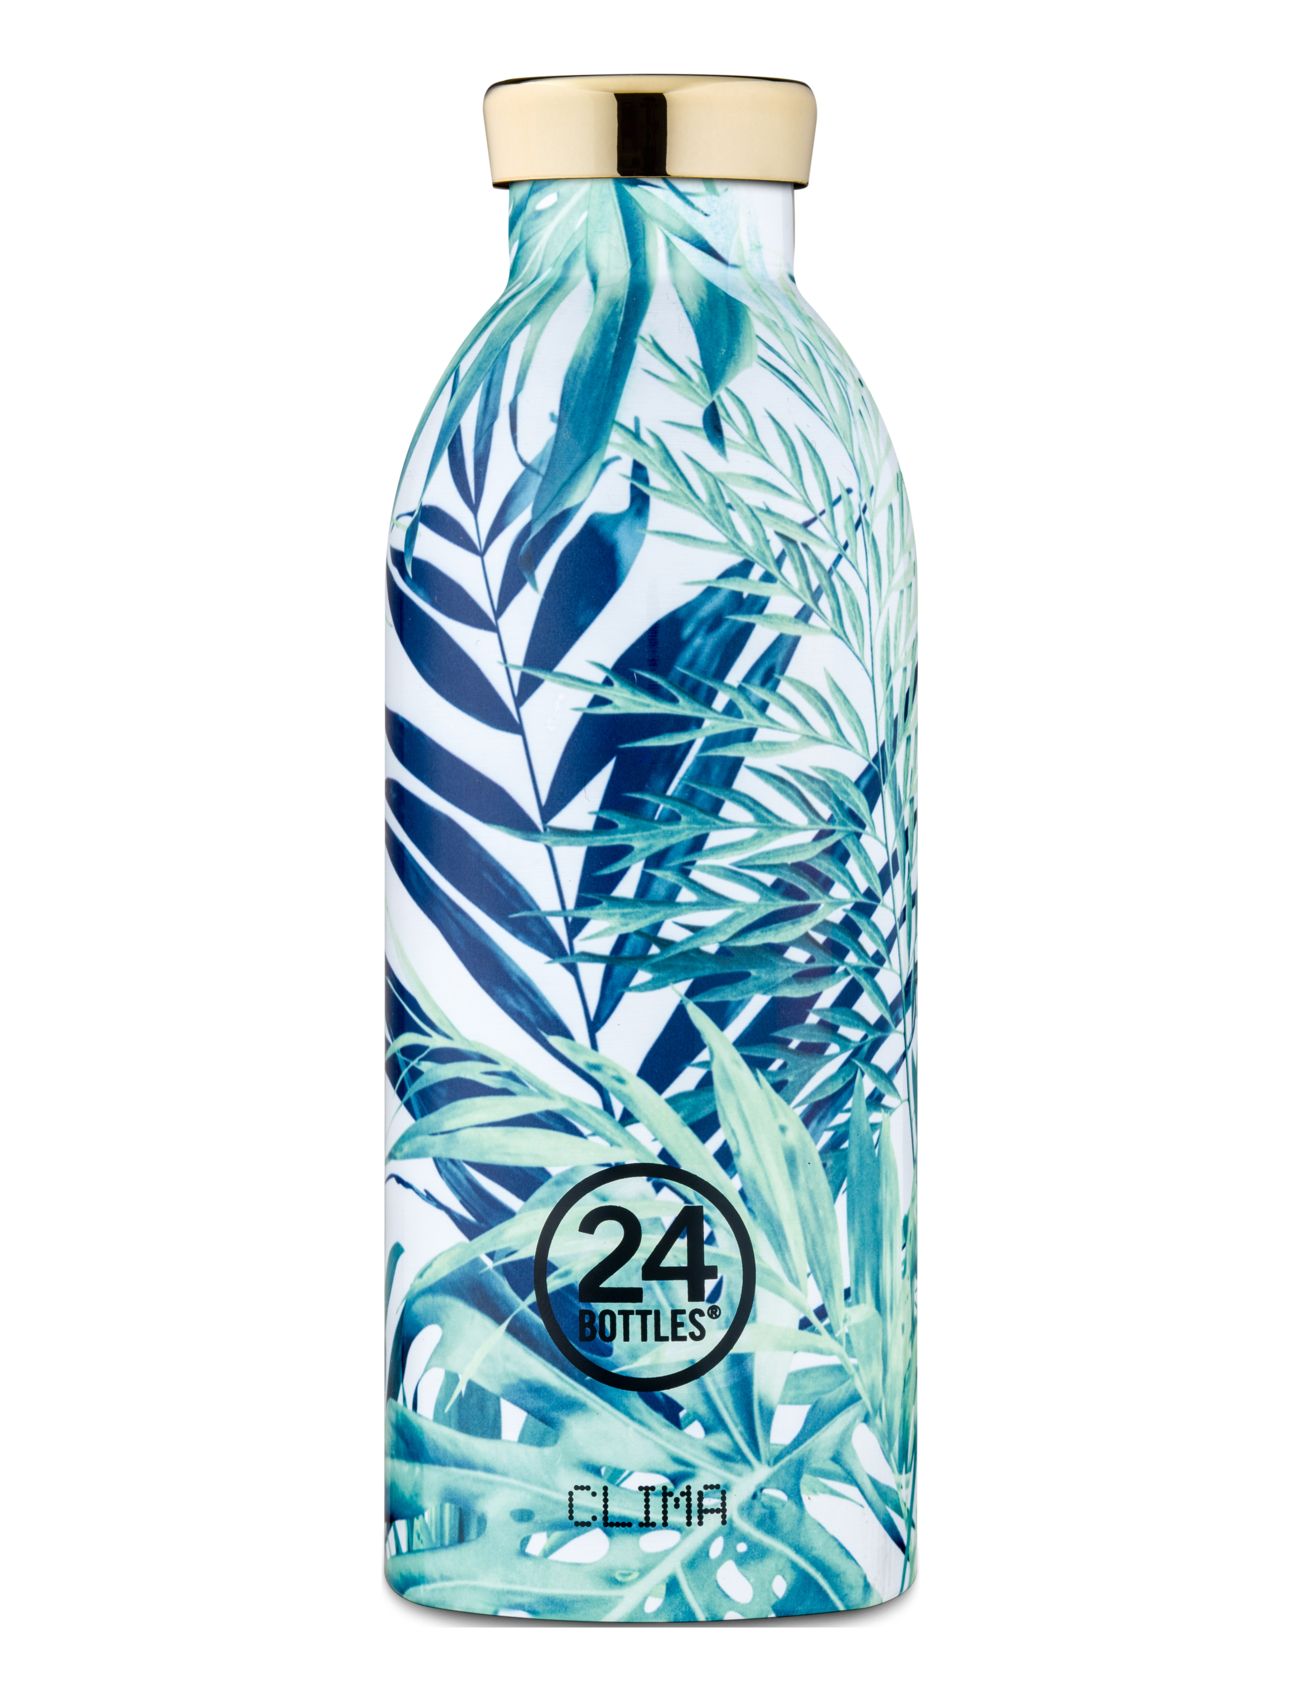 Clima Bottle Home Kitchen Water Bottles Blue 24bottles